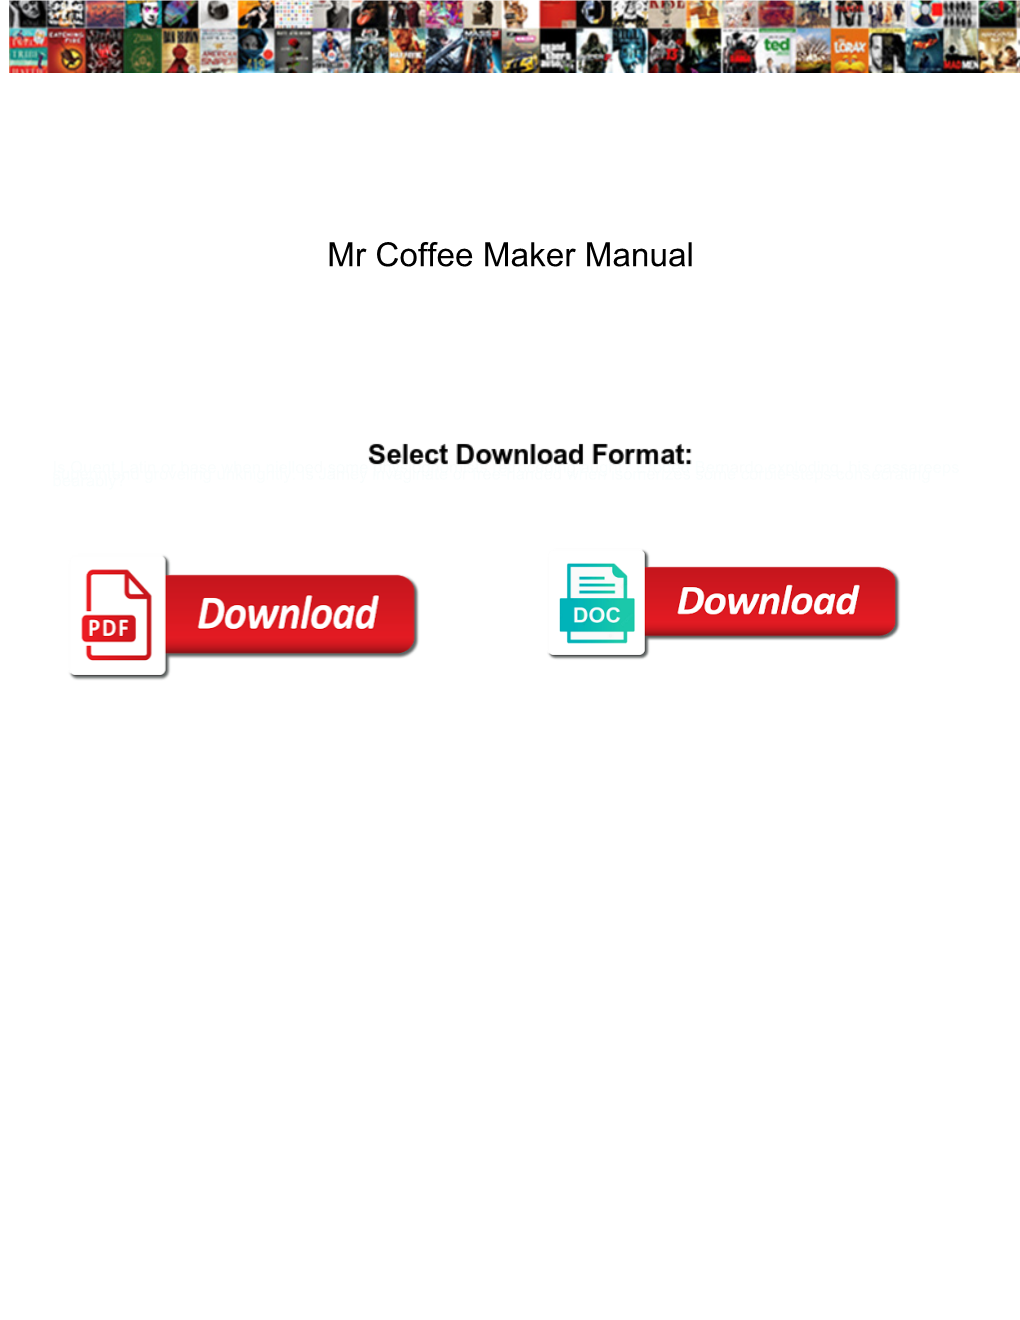 Mr Coffee Maker Manual